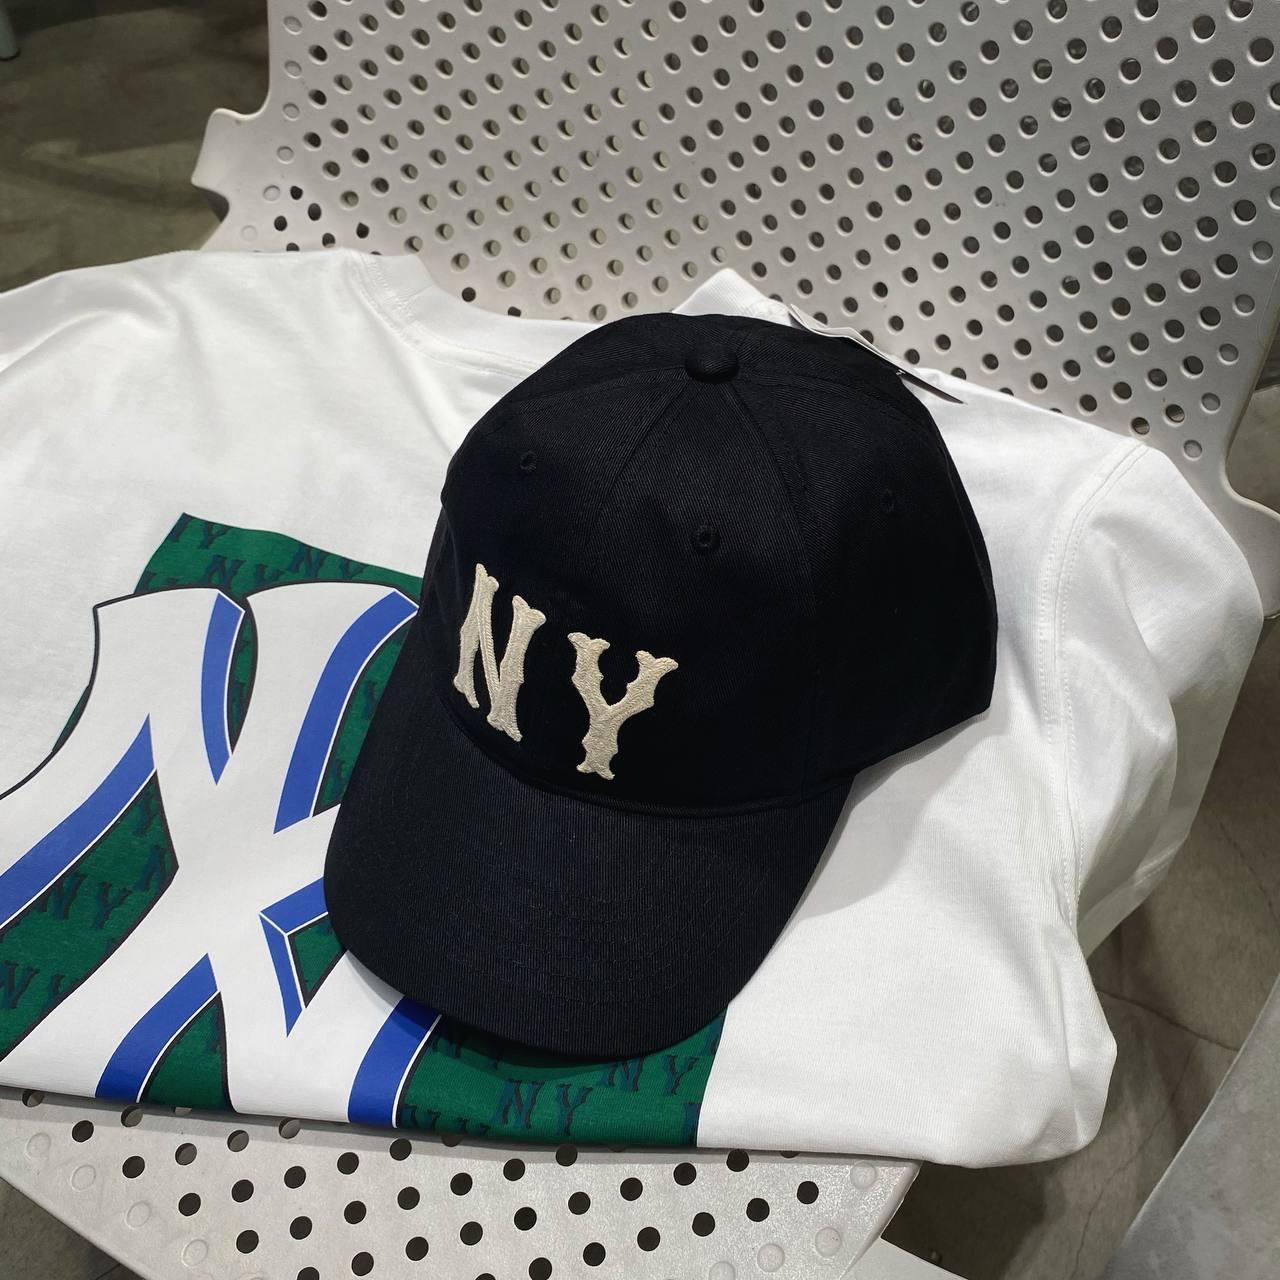 Mũ MLB New York Yankees Glam Adjustable Cap Black